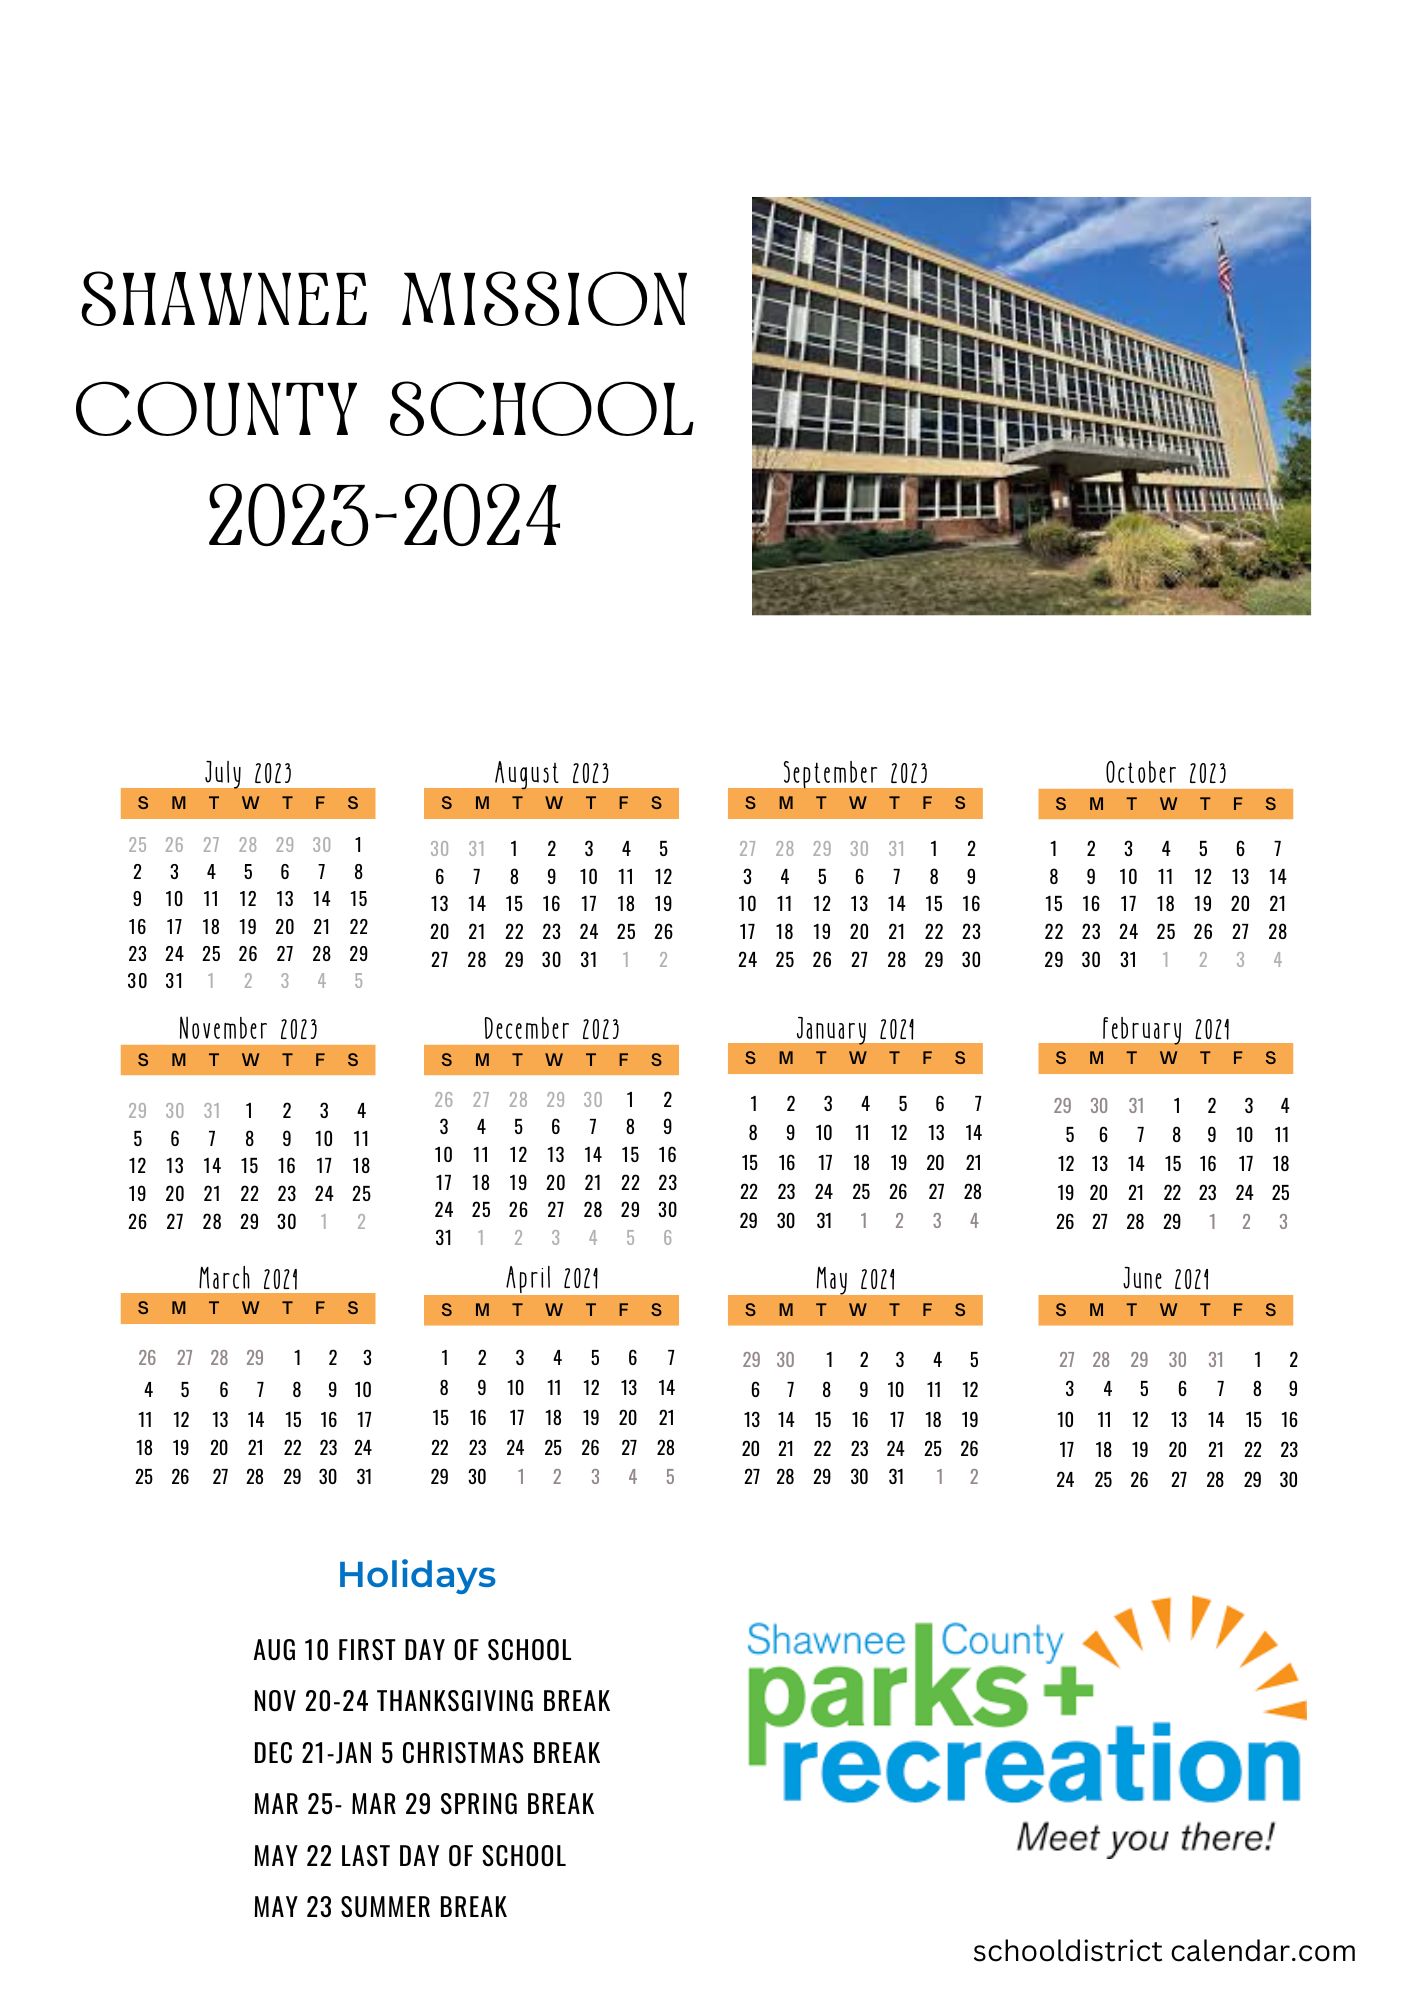 Shawnee Mission School District Calendar Holidays 20232024